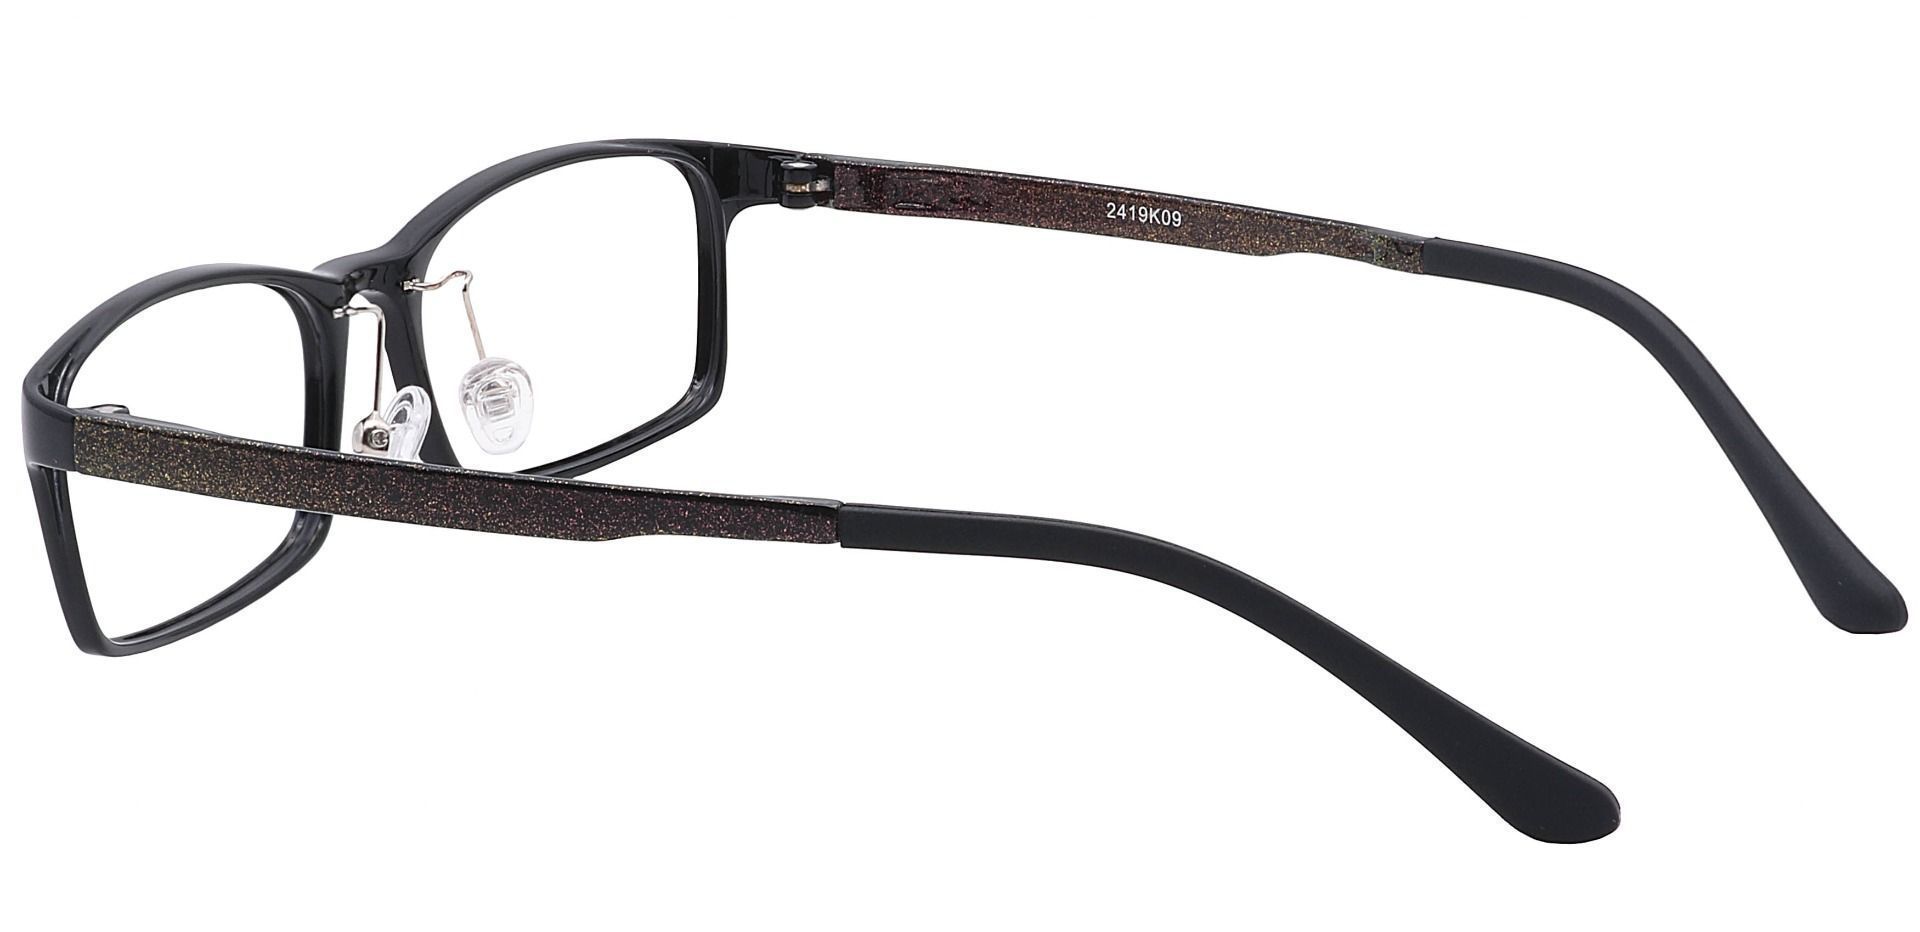 Hydra Rectangle Progressive Glasses - Black